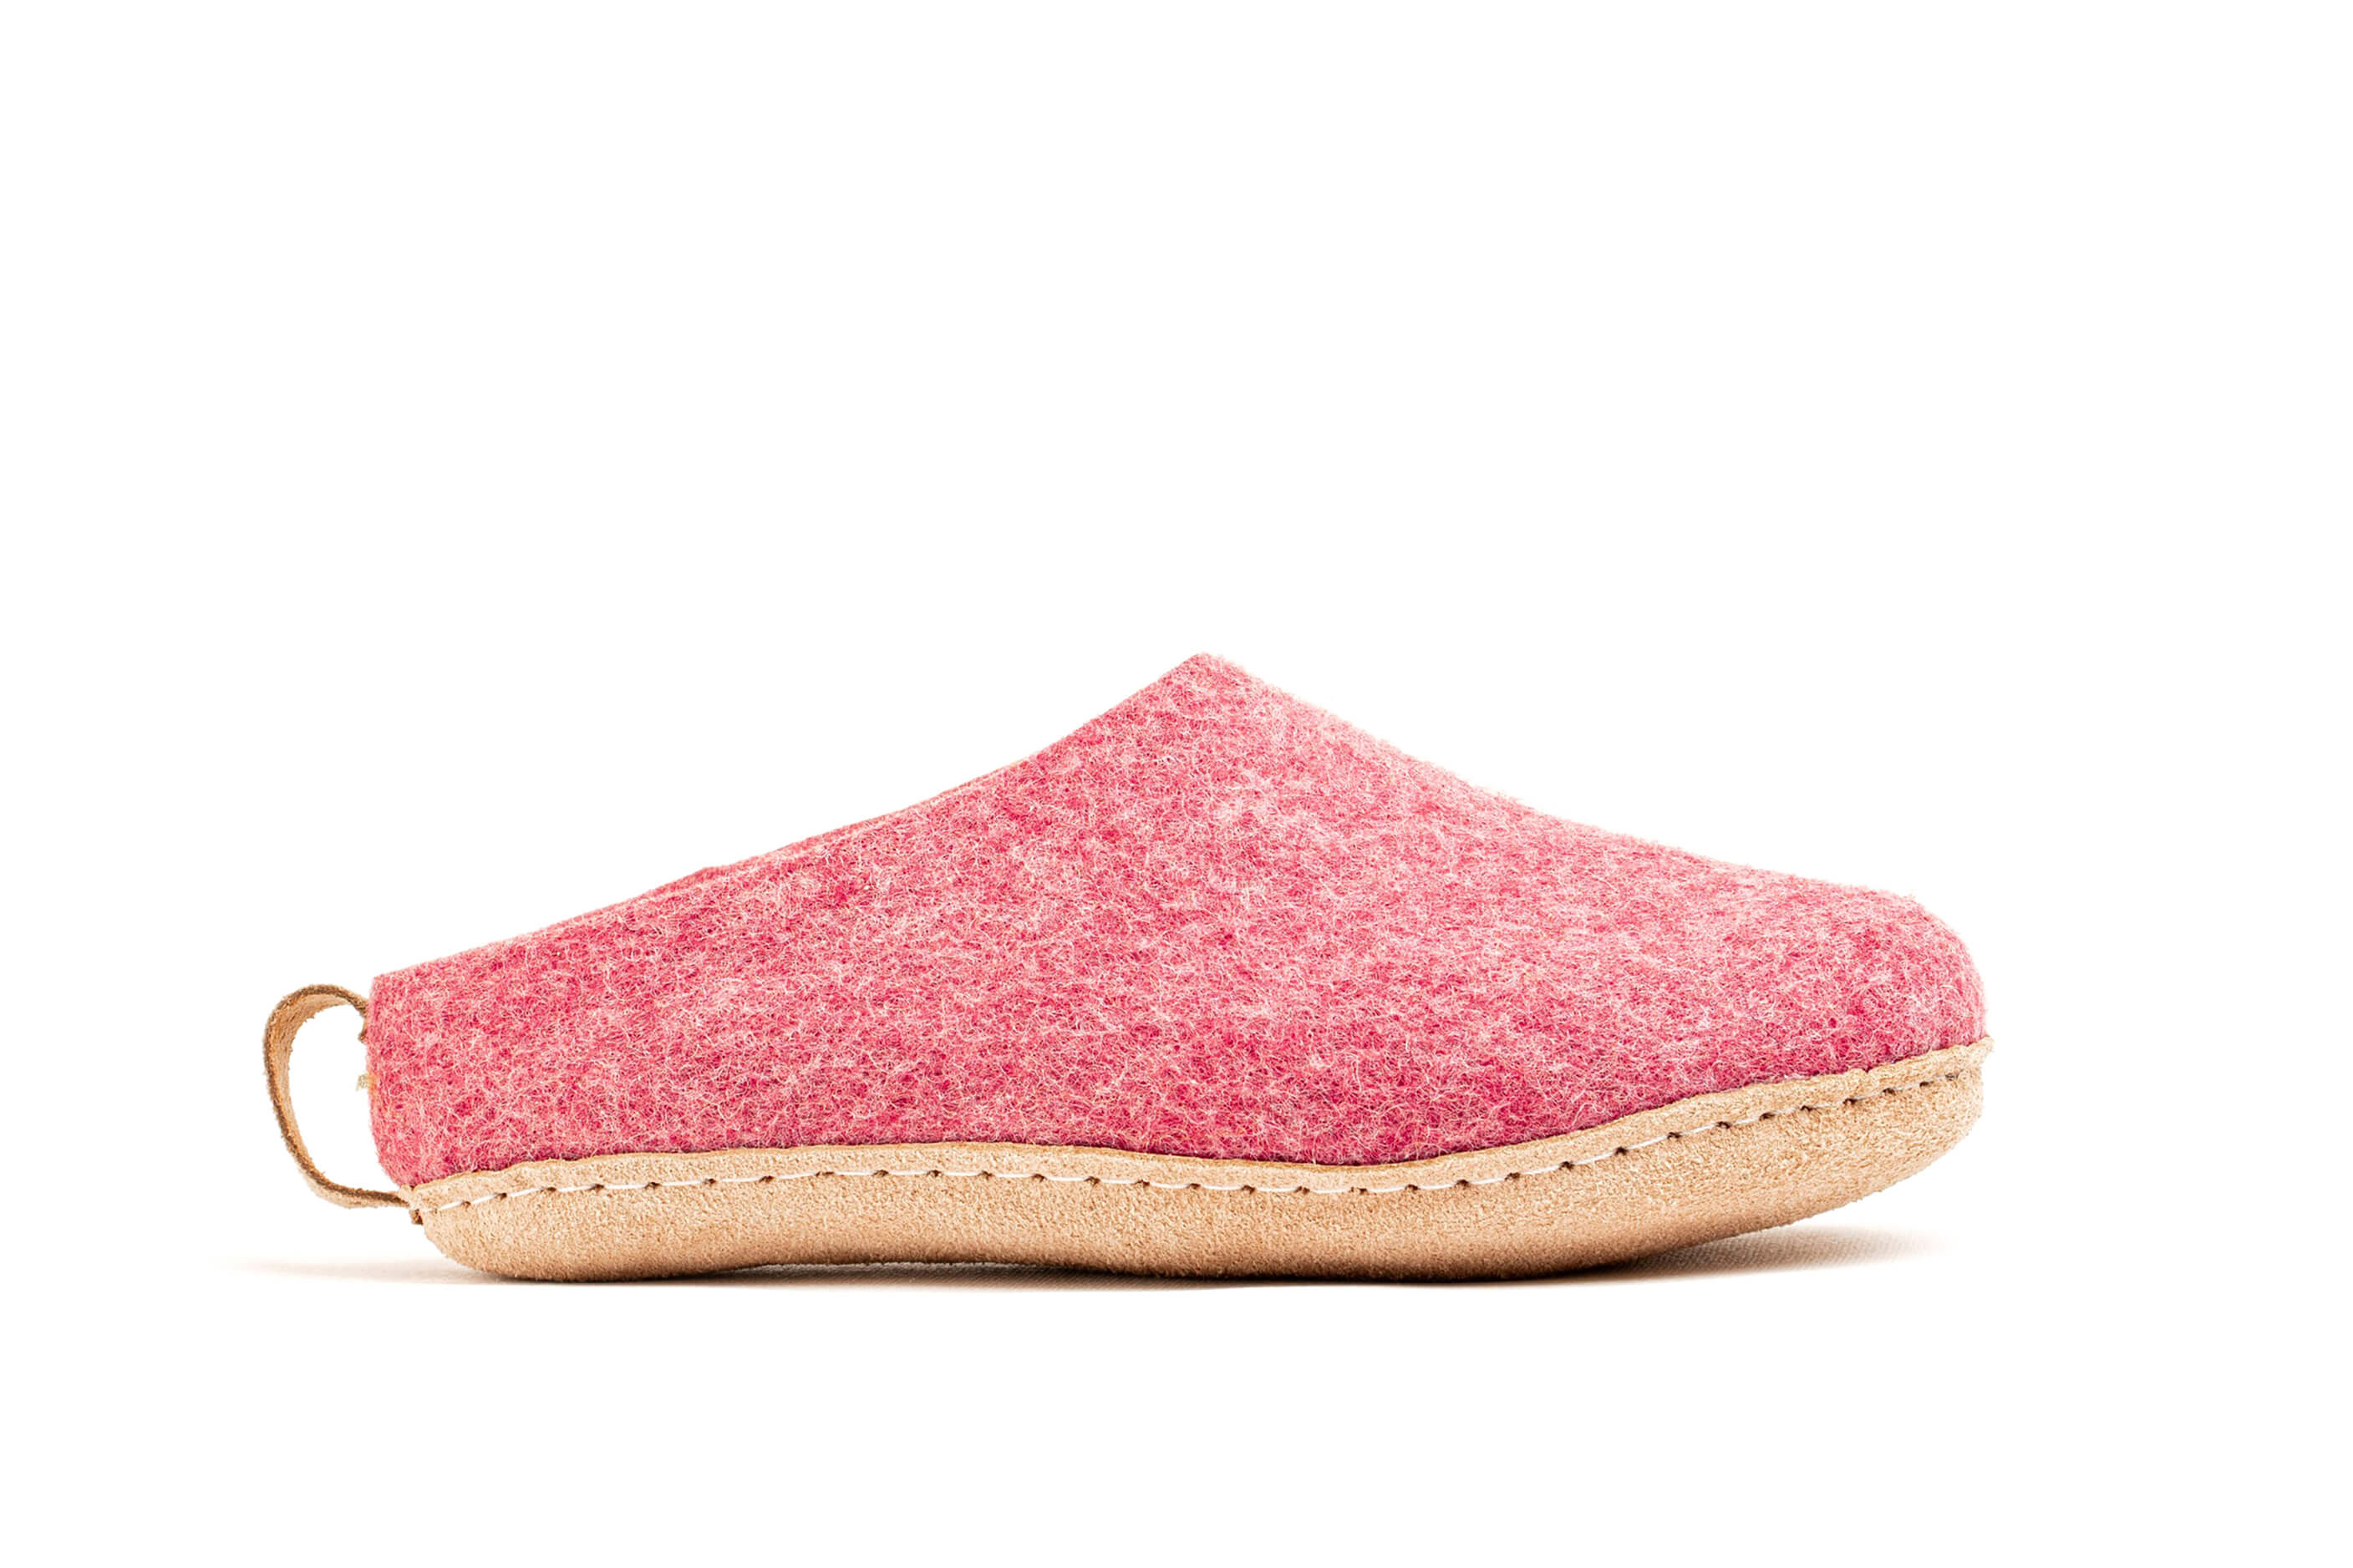 Indoor Open Heel Slippers With Leather Sole - Cherry PinkIndoor Open Heel Slippers With Leather Sole - Cherry Pink